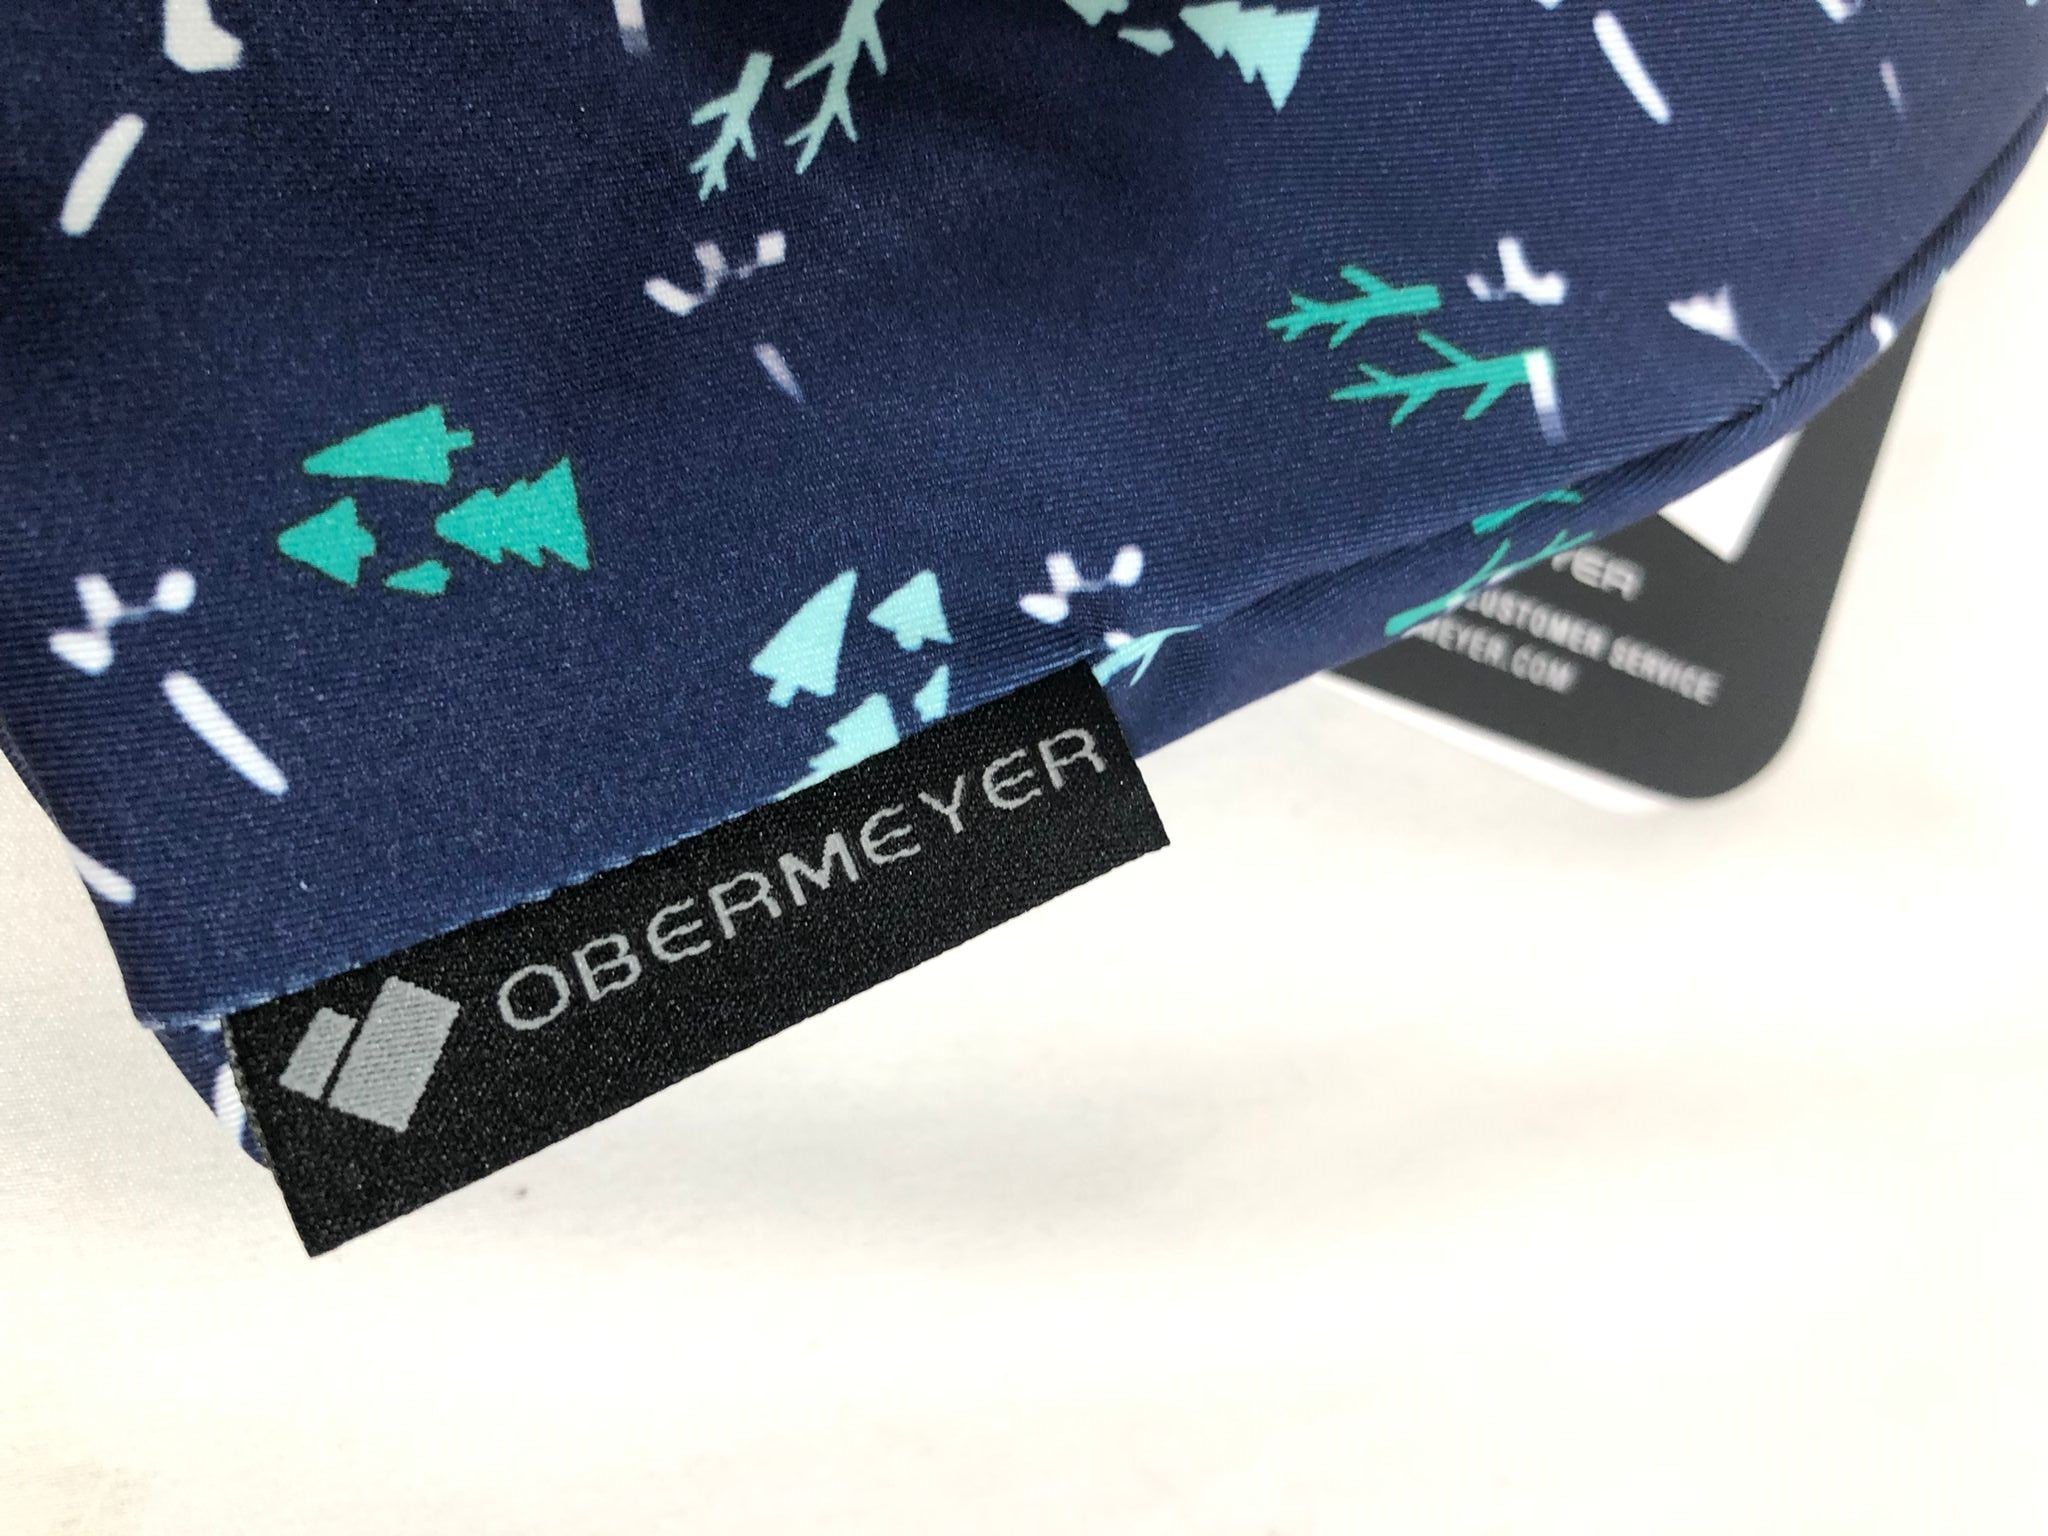 Obermeyer First-On Fleece Lined Hat